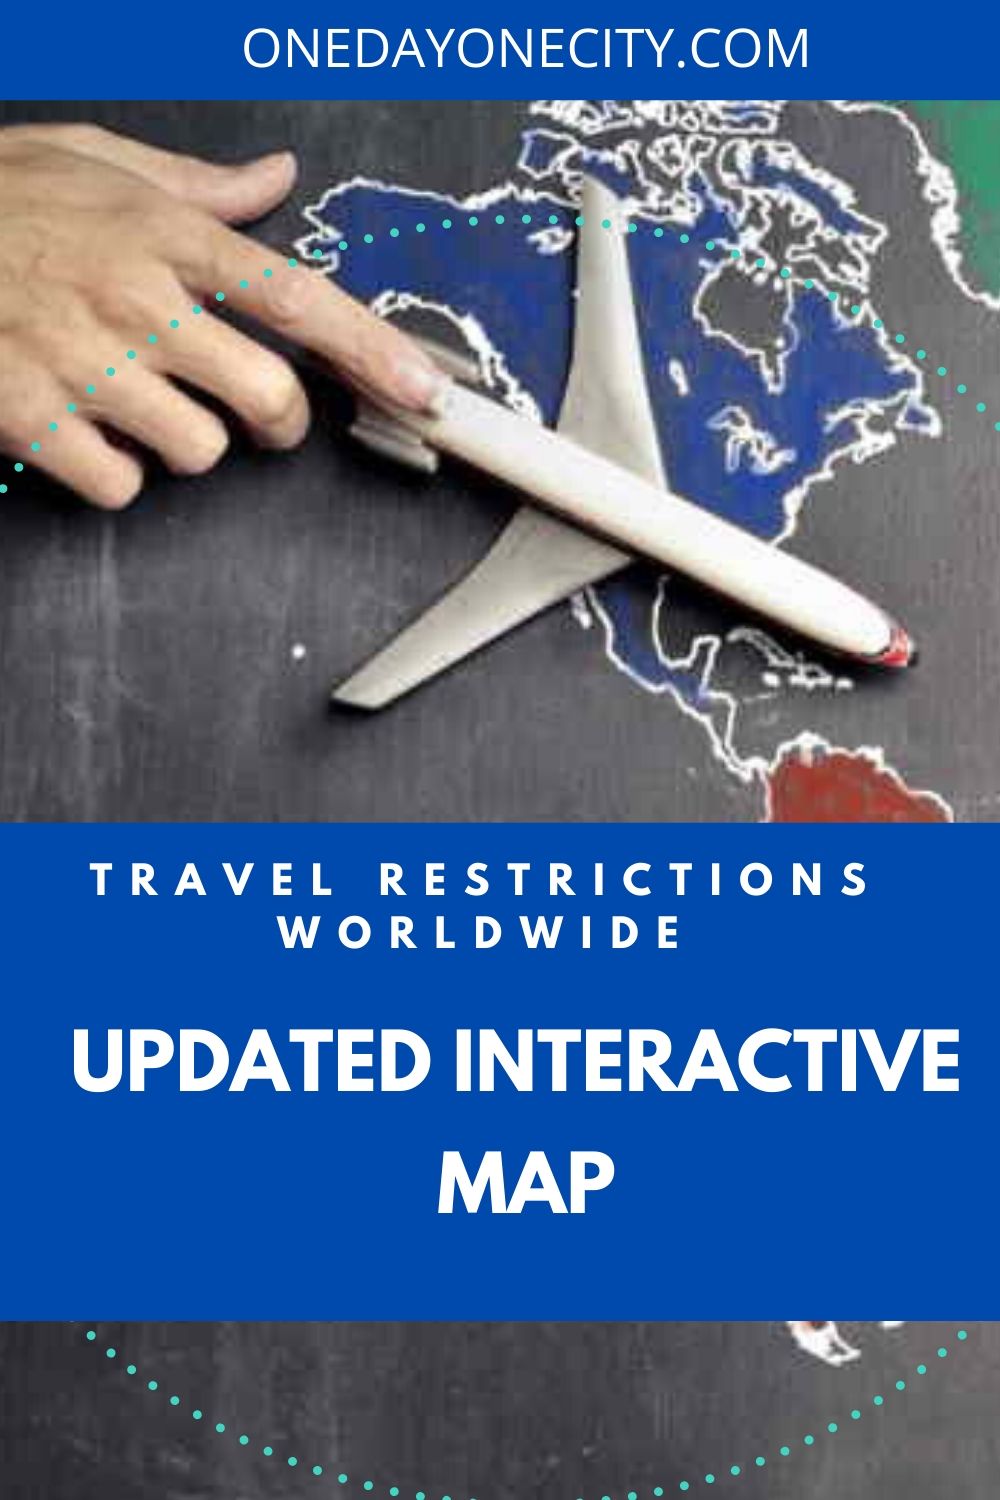 Travel restrictions worldwide update interactive map